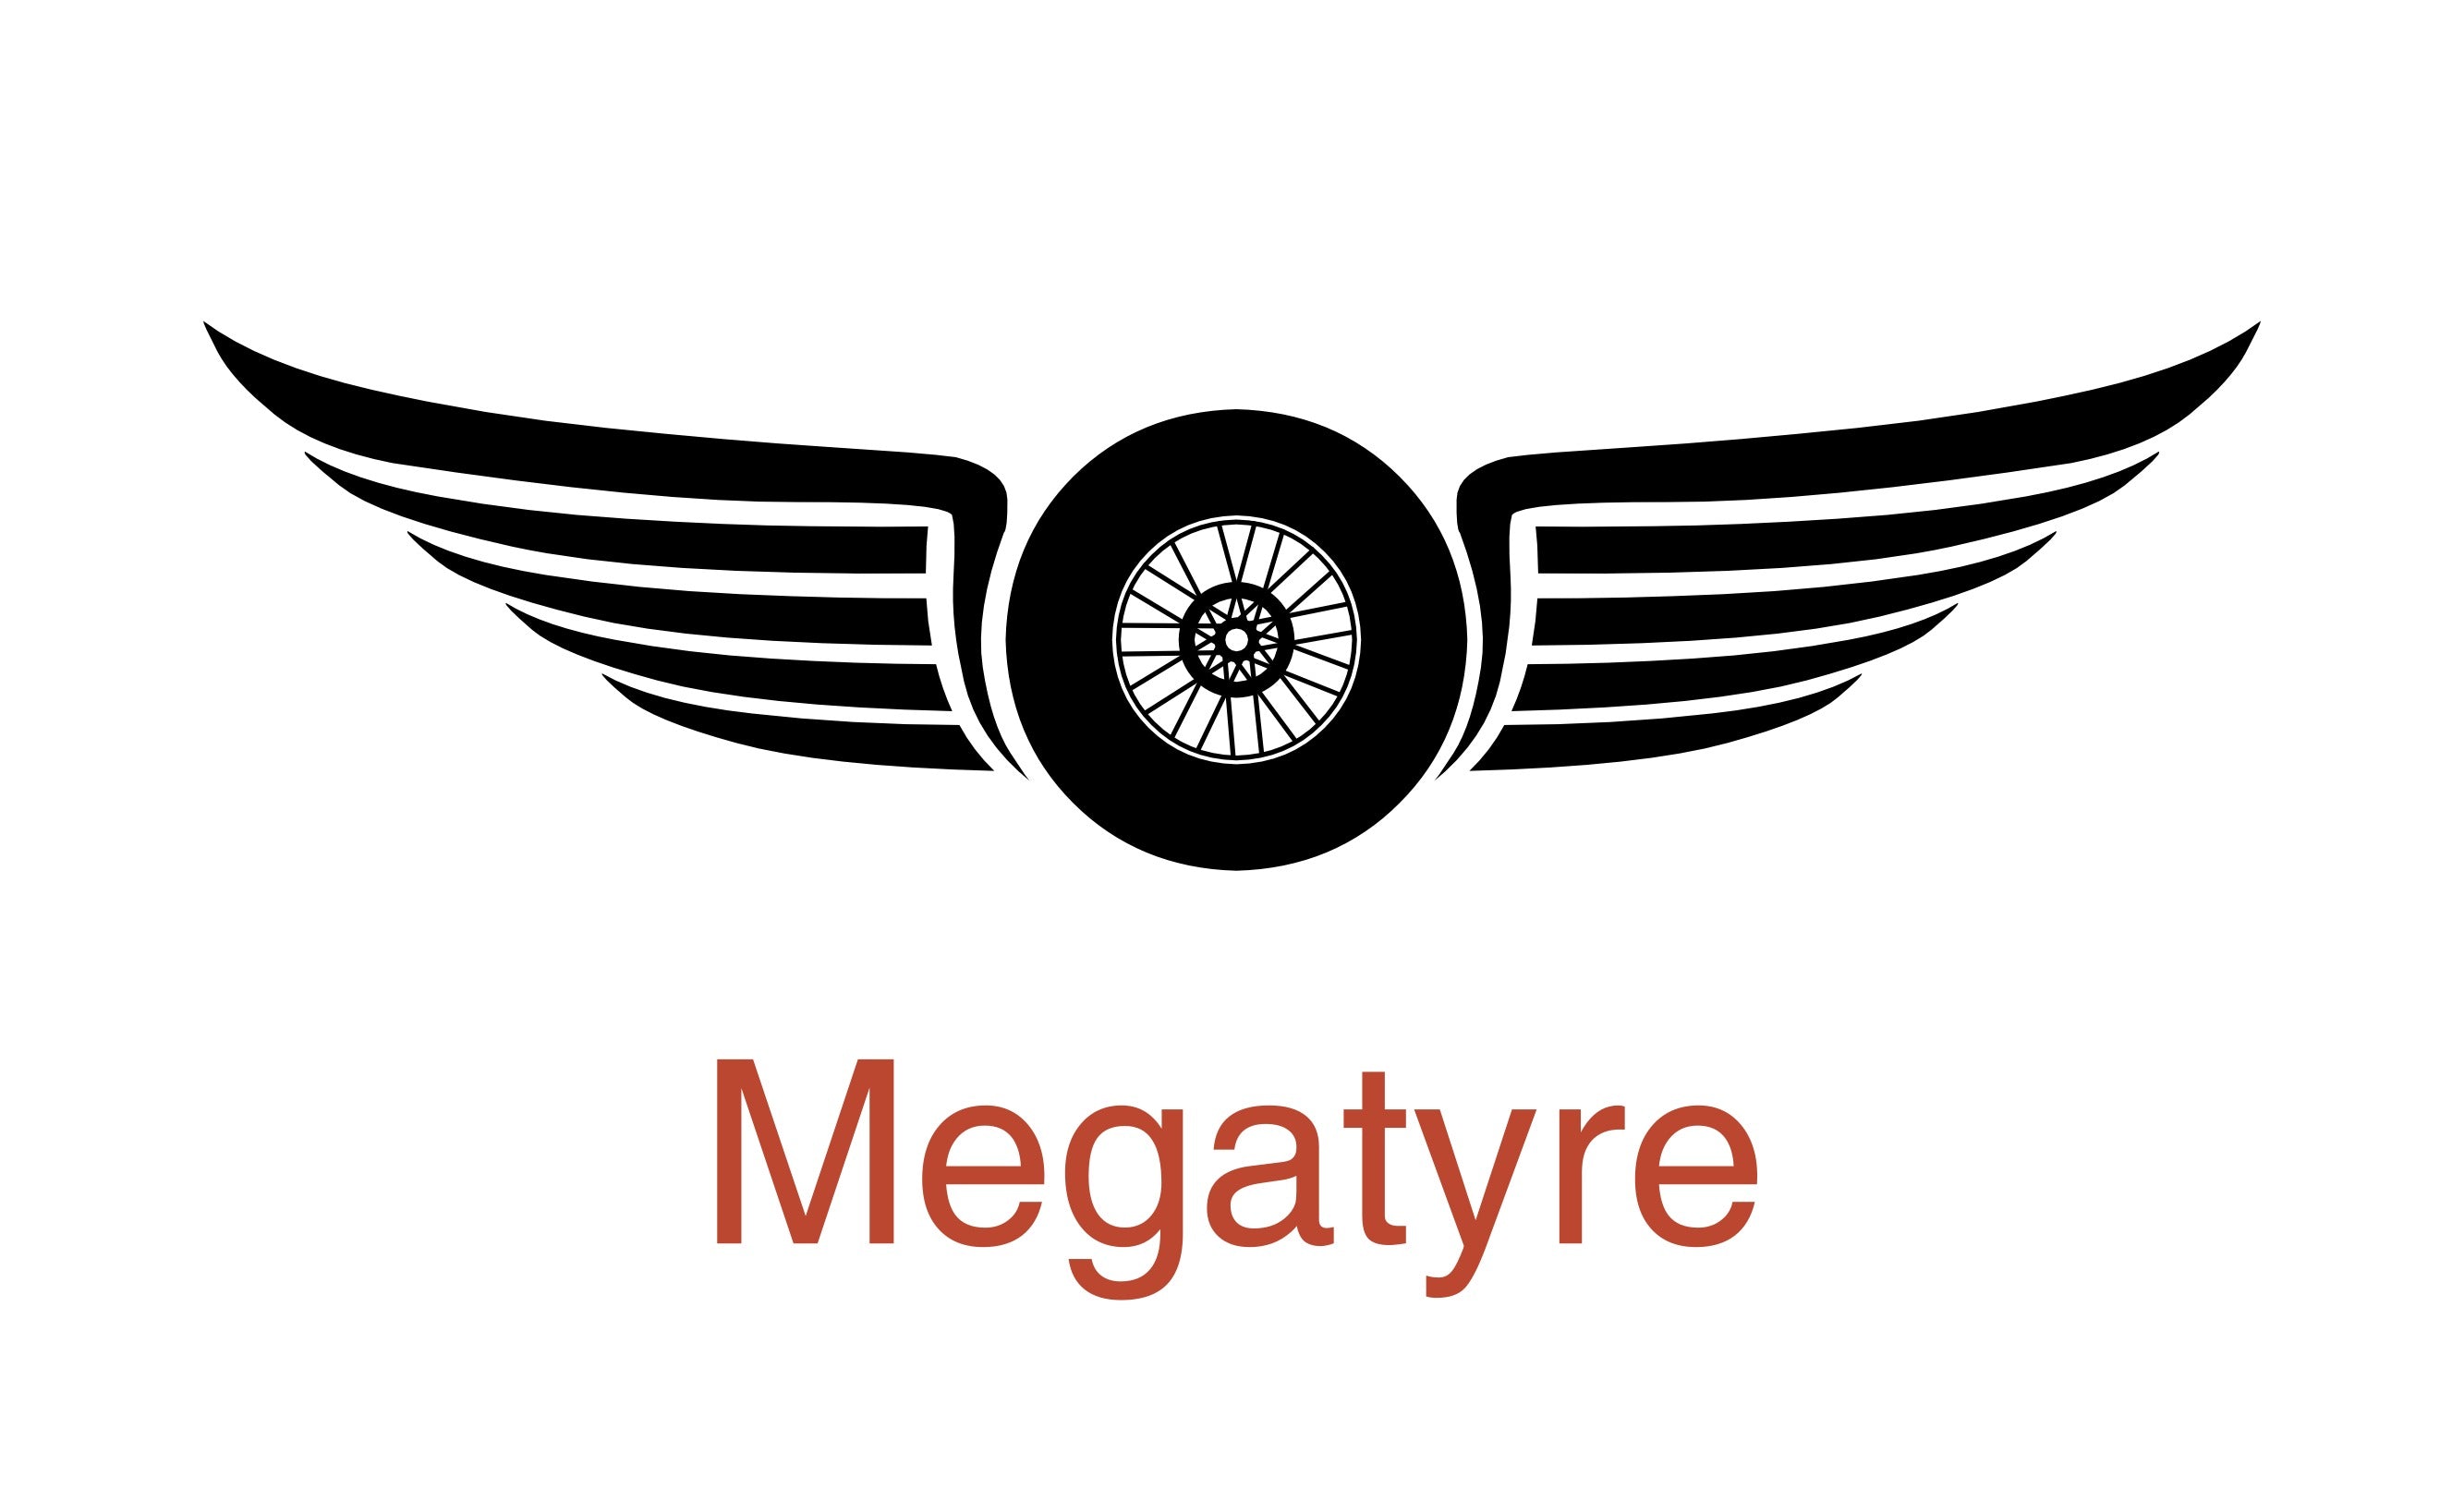 Megatyre 2018 Limited